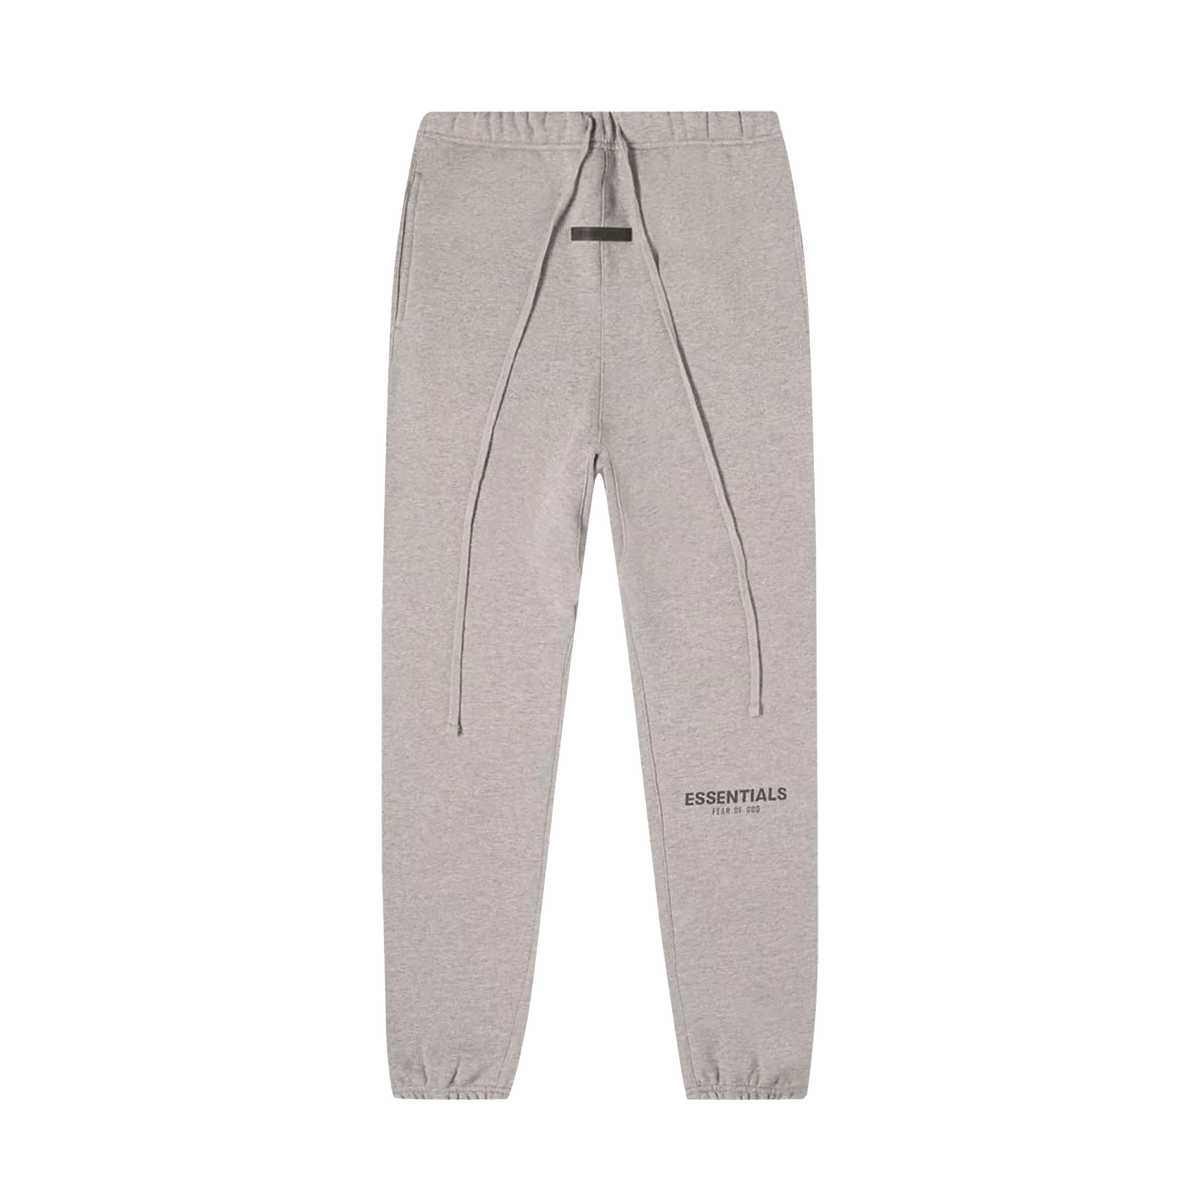 Contrast High Waist Cotton Denim Shorts Essentials Sweatpants 'Dark Heather Oatmeal' - UrlfreezeShops